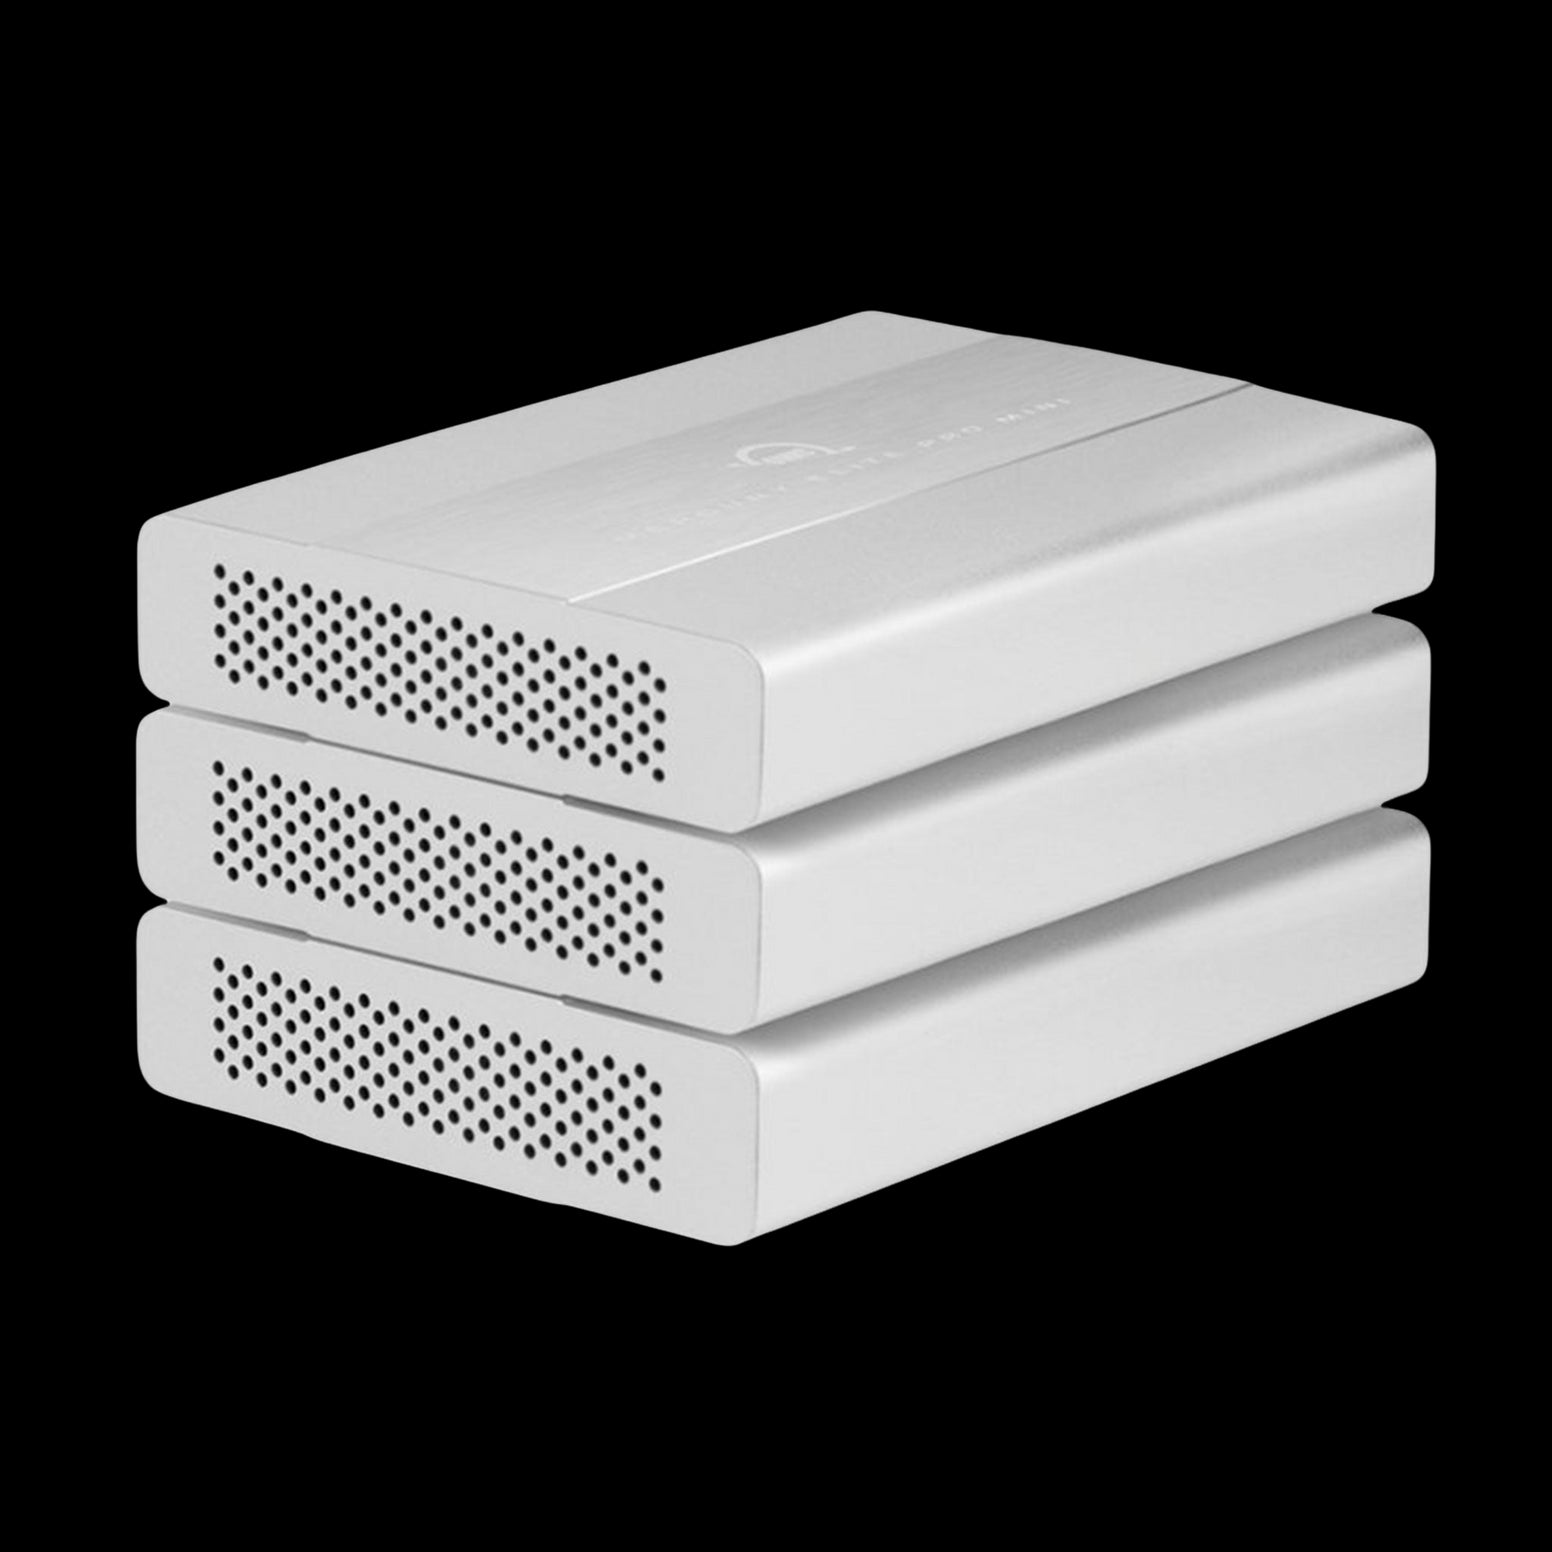 4TB OWC HDD Mercury Elite Pro mini Portable External Storage (USB 3.1 Gen 2 & eSATA) - Discontinued